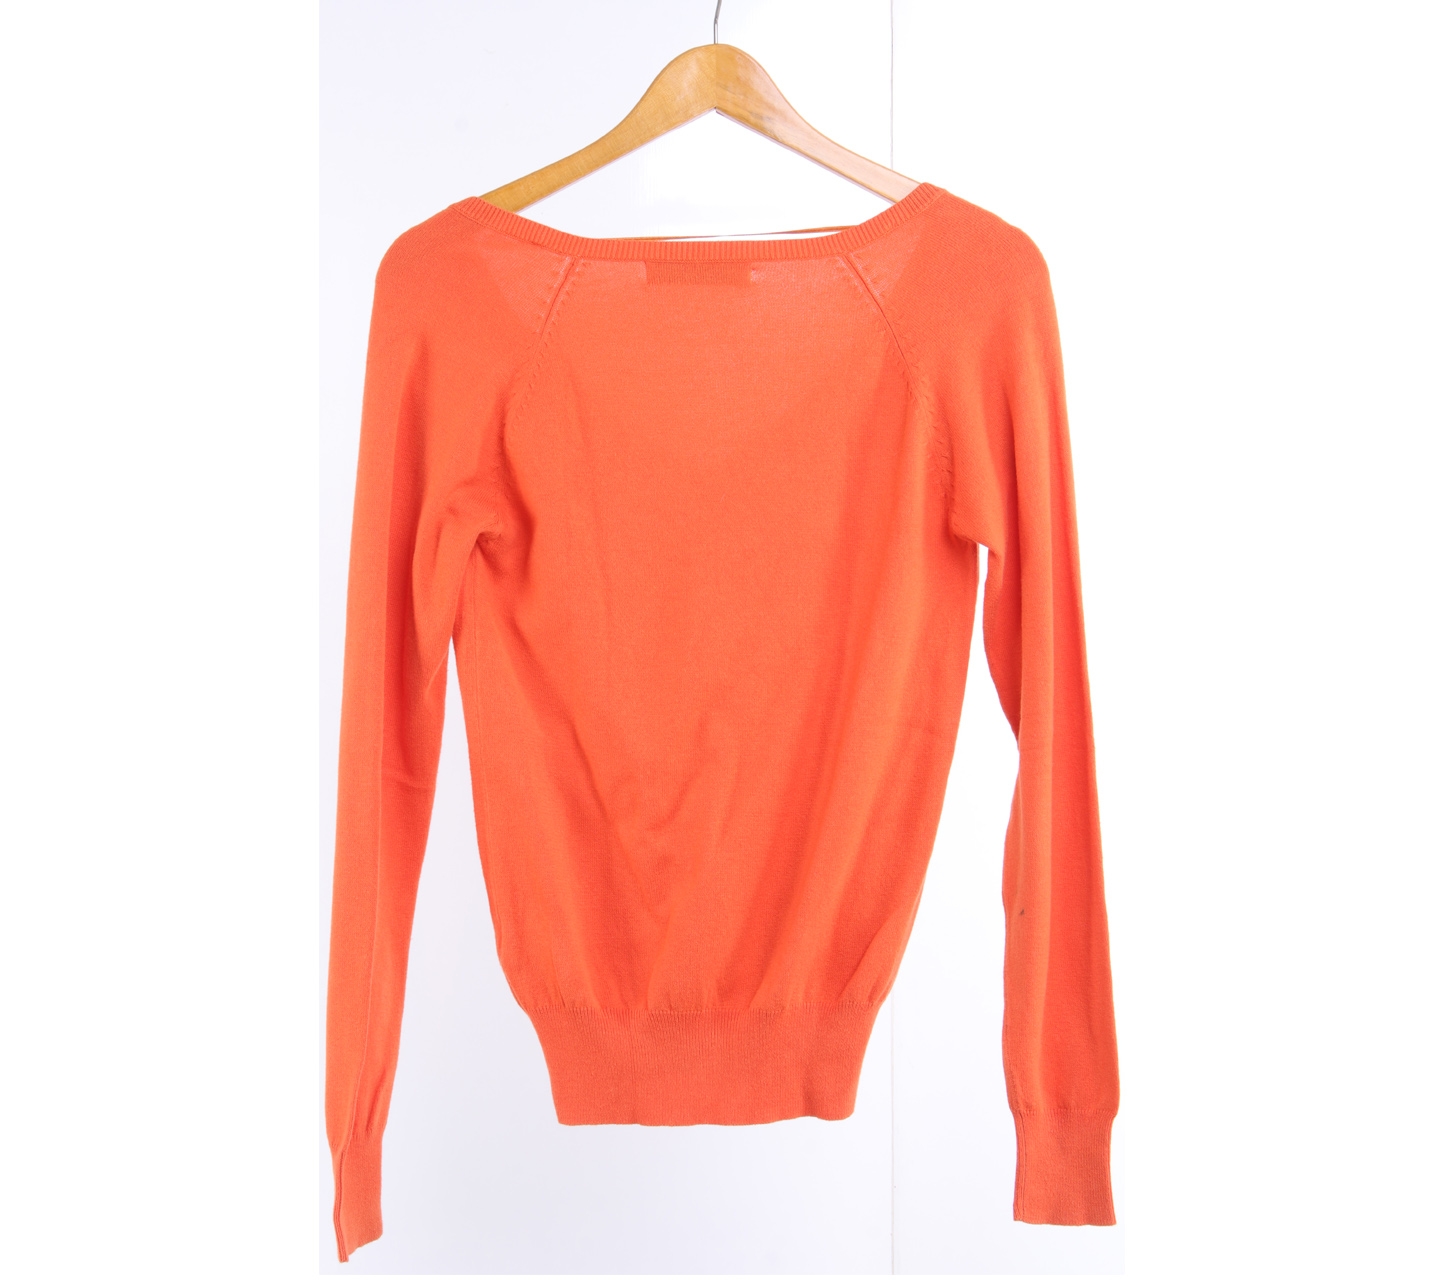 Zara Orange Knit Sweater